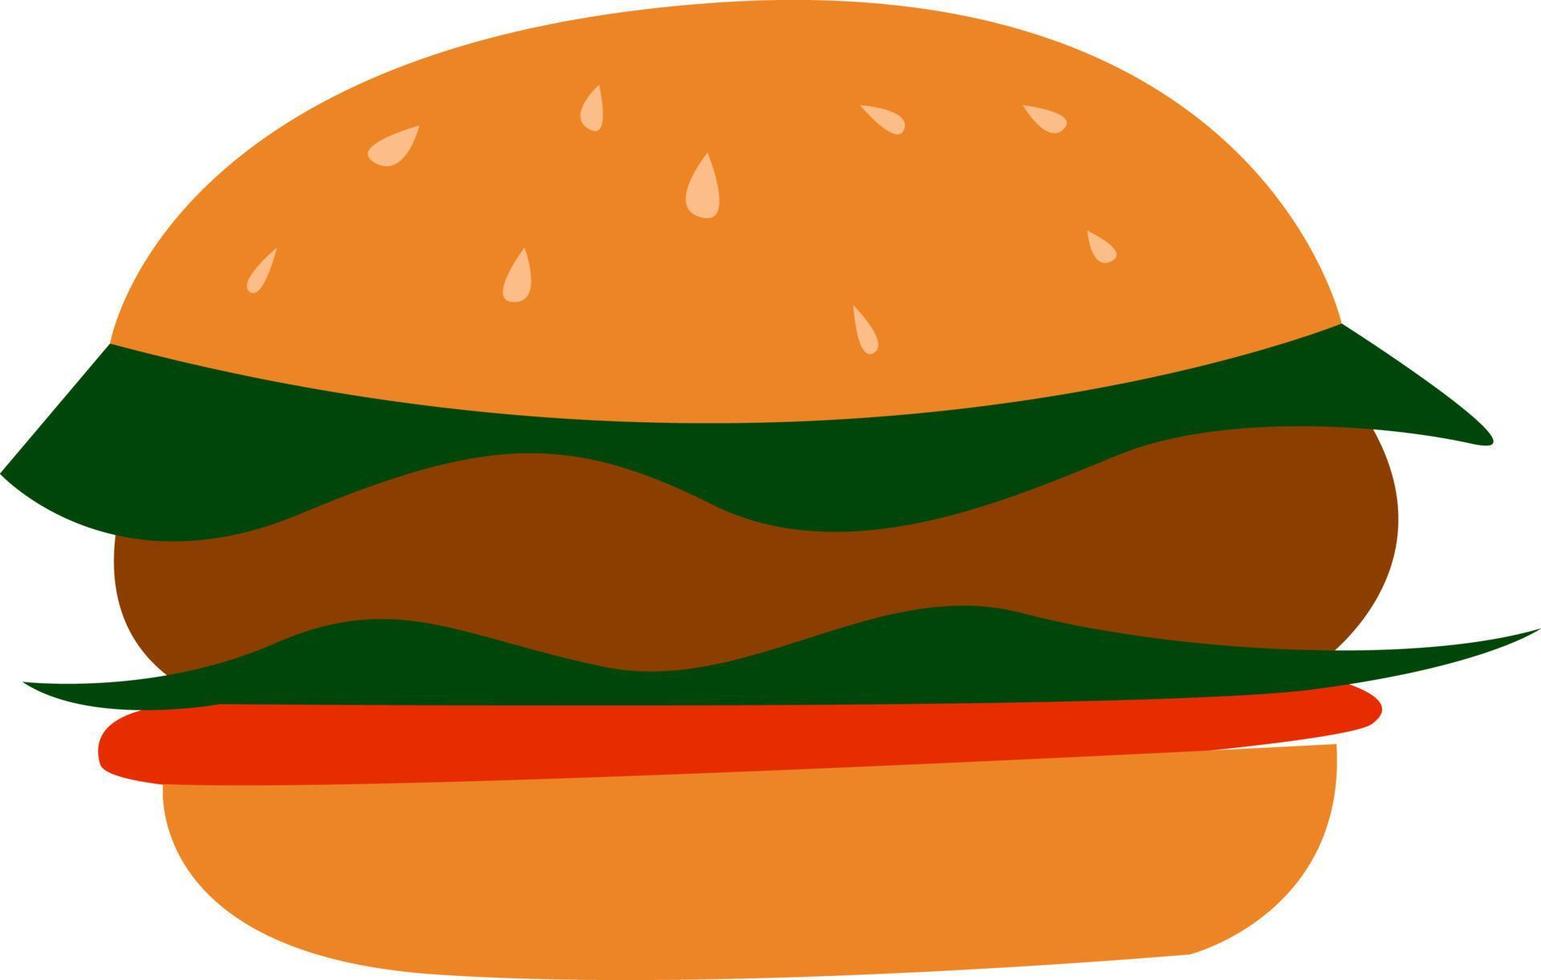 Cheeseburger, illustration, vector on white background.